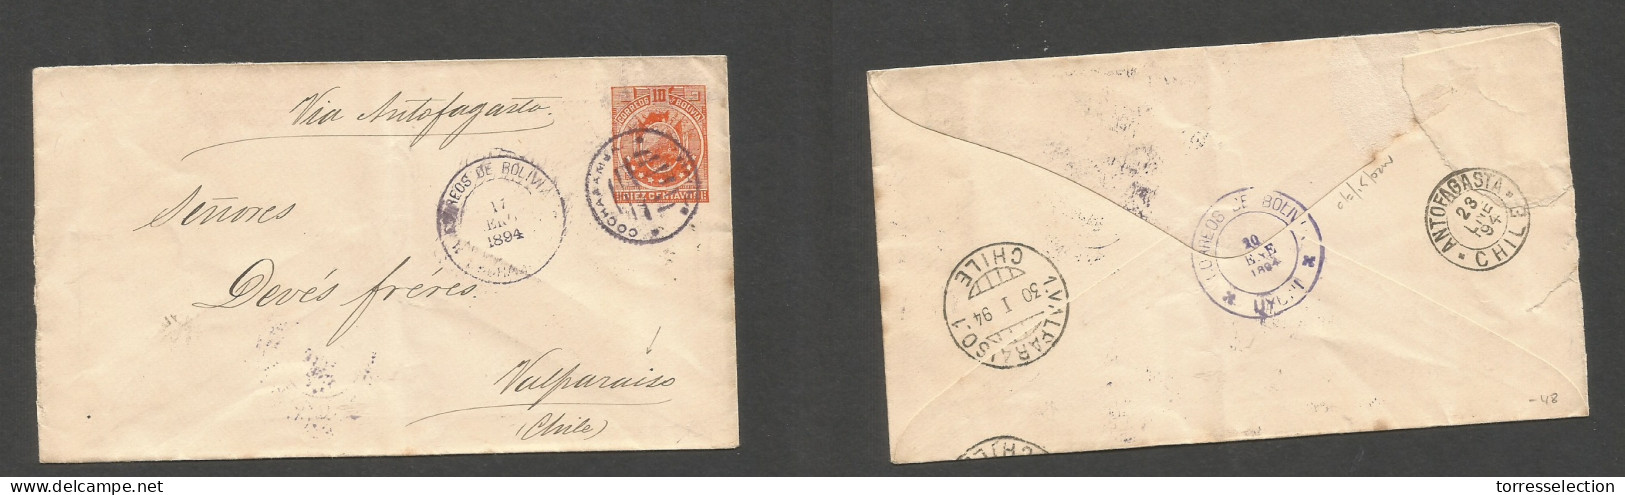 BOLIVIA. 1894 (17 Ene) Cochahamba - Chile, Valparaiso (30 Jan) Via Antofagasta - Ujuny, 10c Orange Stat Env. Fine. SALE. - Bolivien